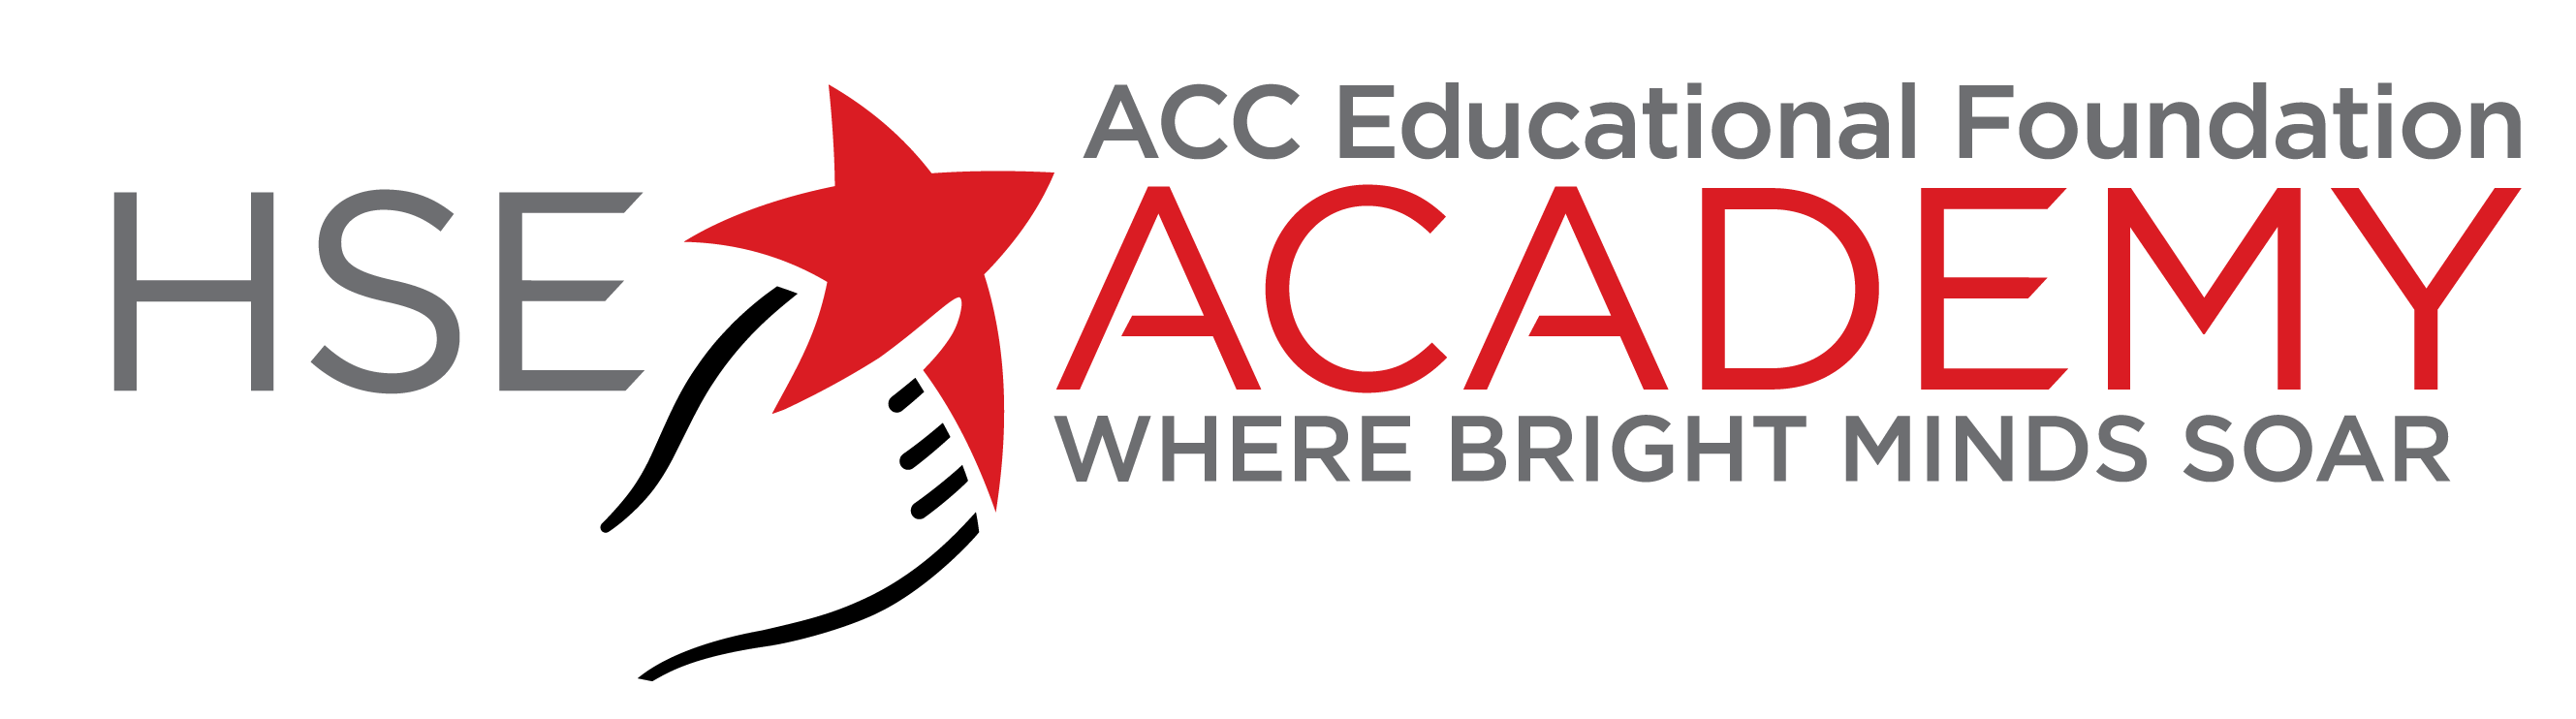 ACCEF High School Equivalency Academy (Free) logo